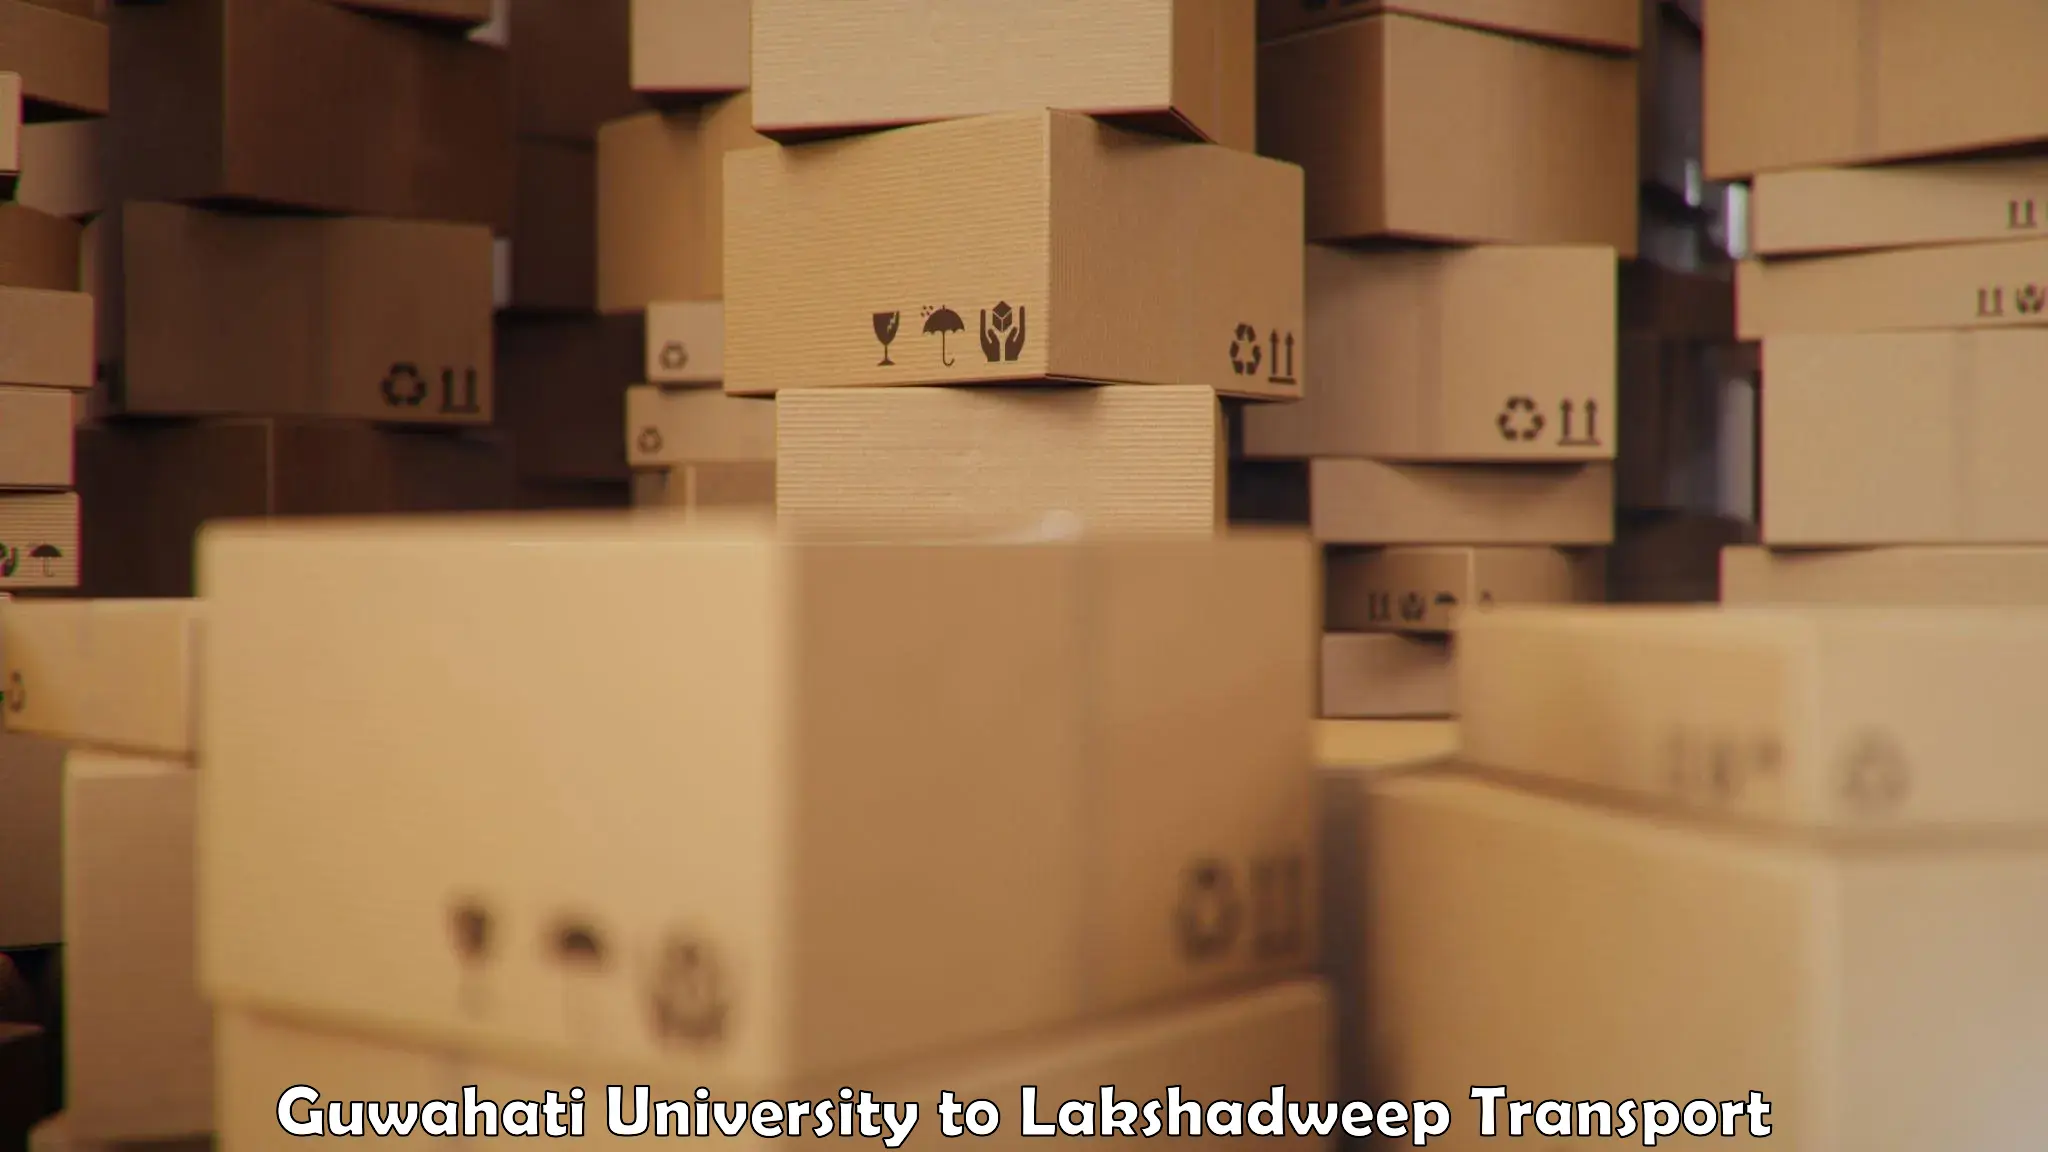 Pick up transport service Guwahati University to Lakshadweep